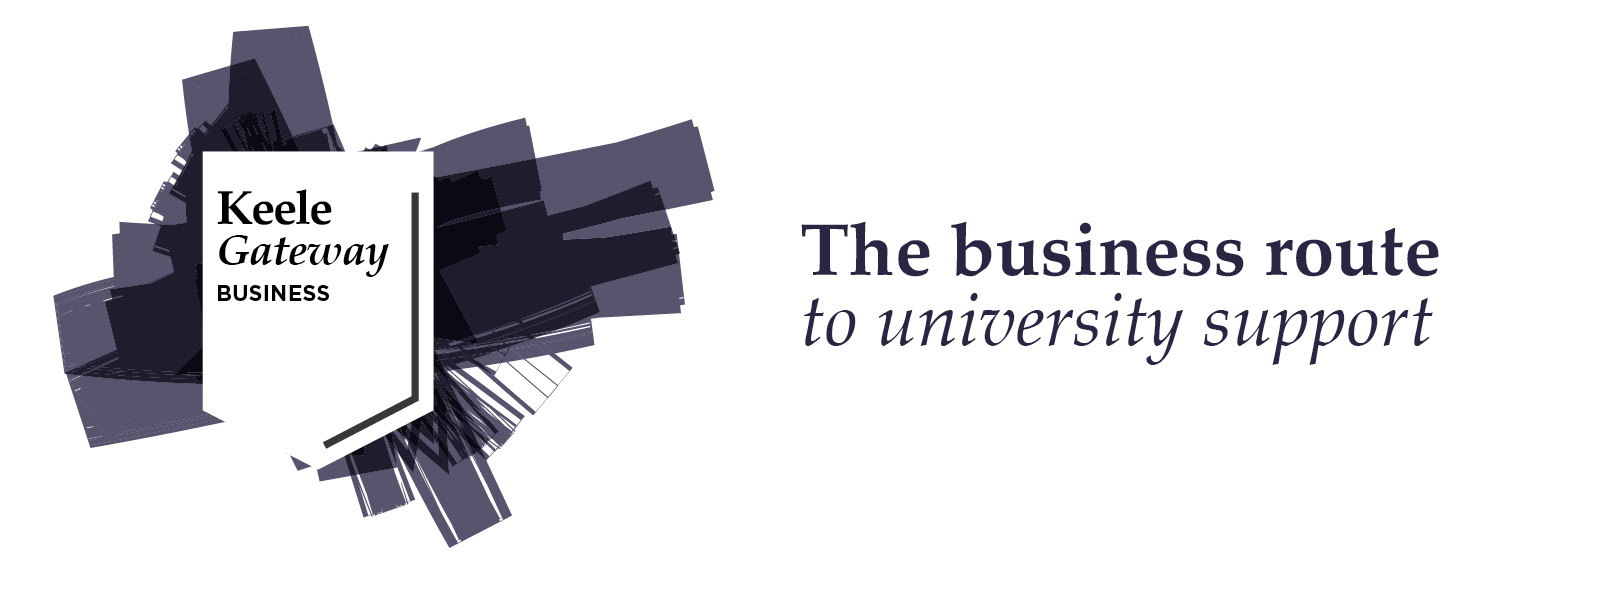 Keele University Business Gateway - Business support 
The business route to university support 